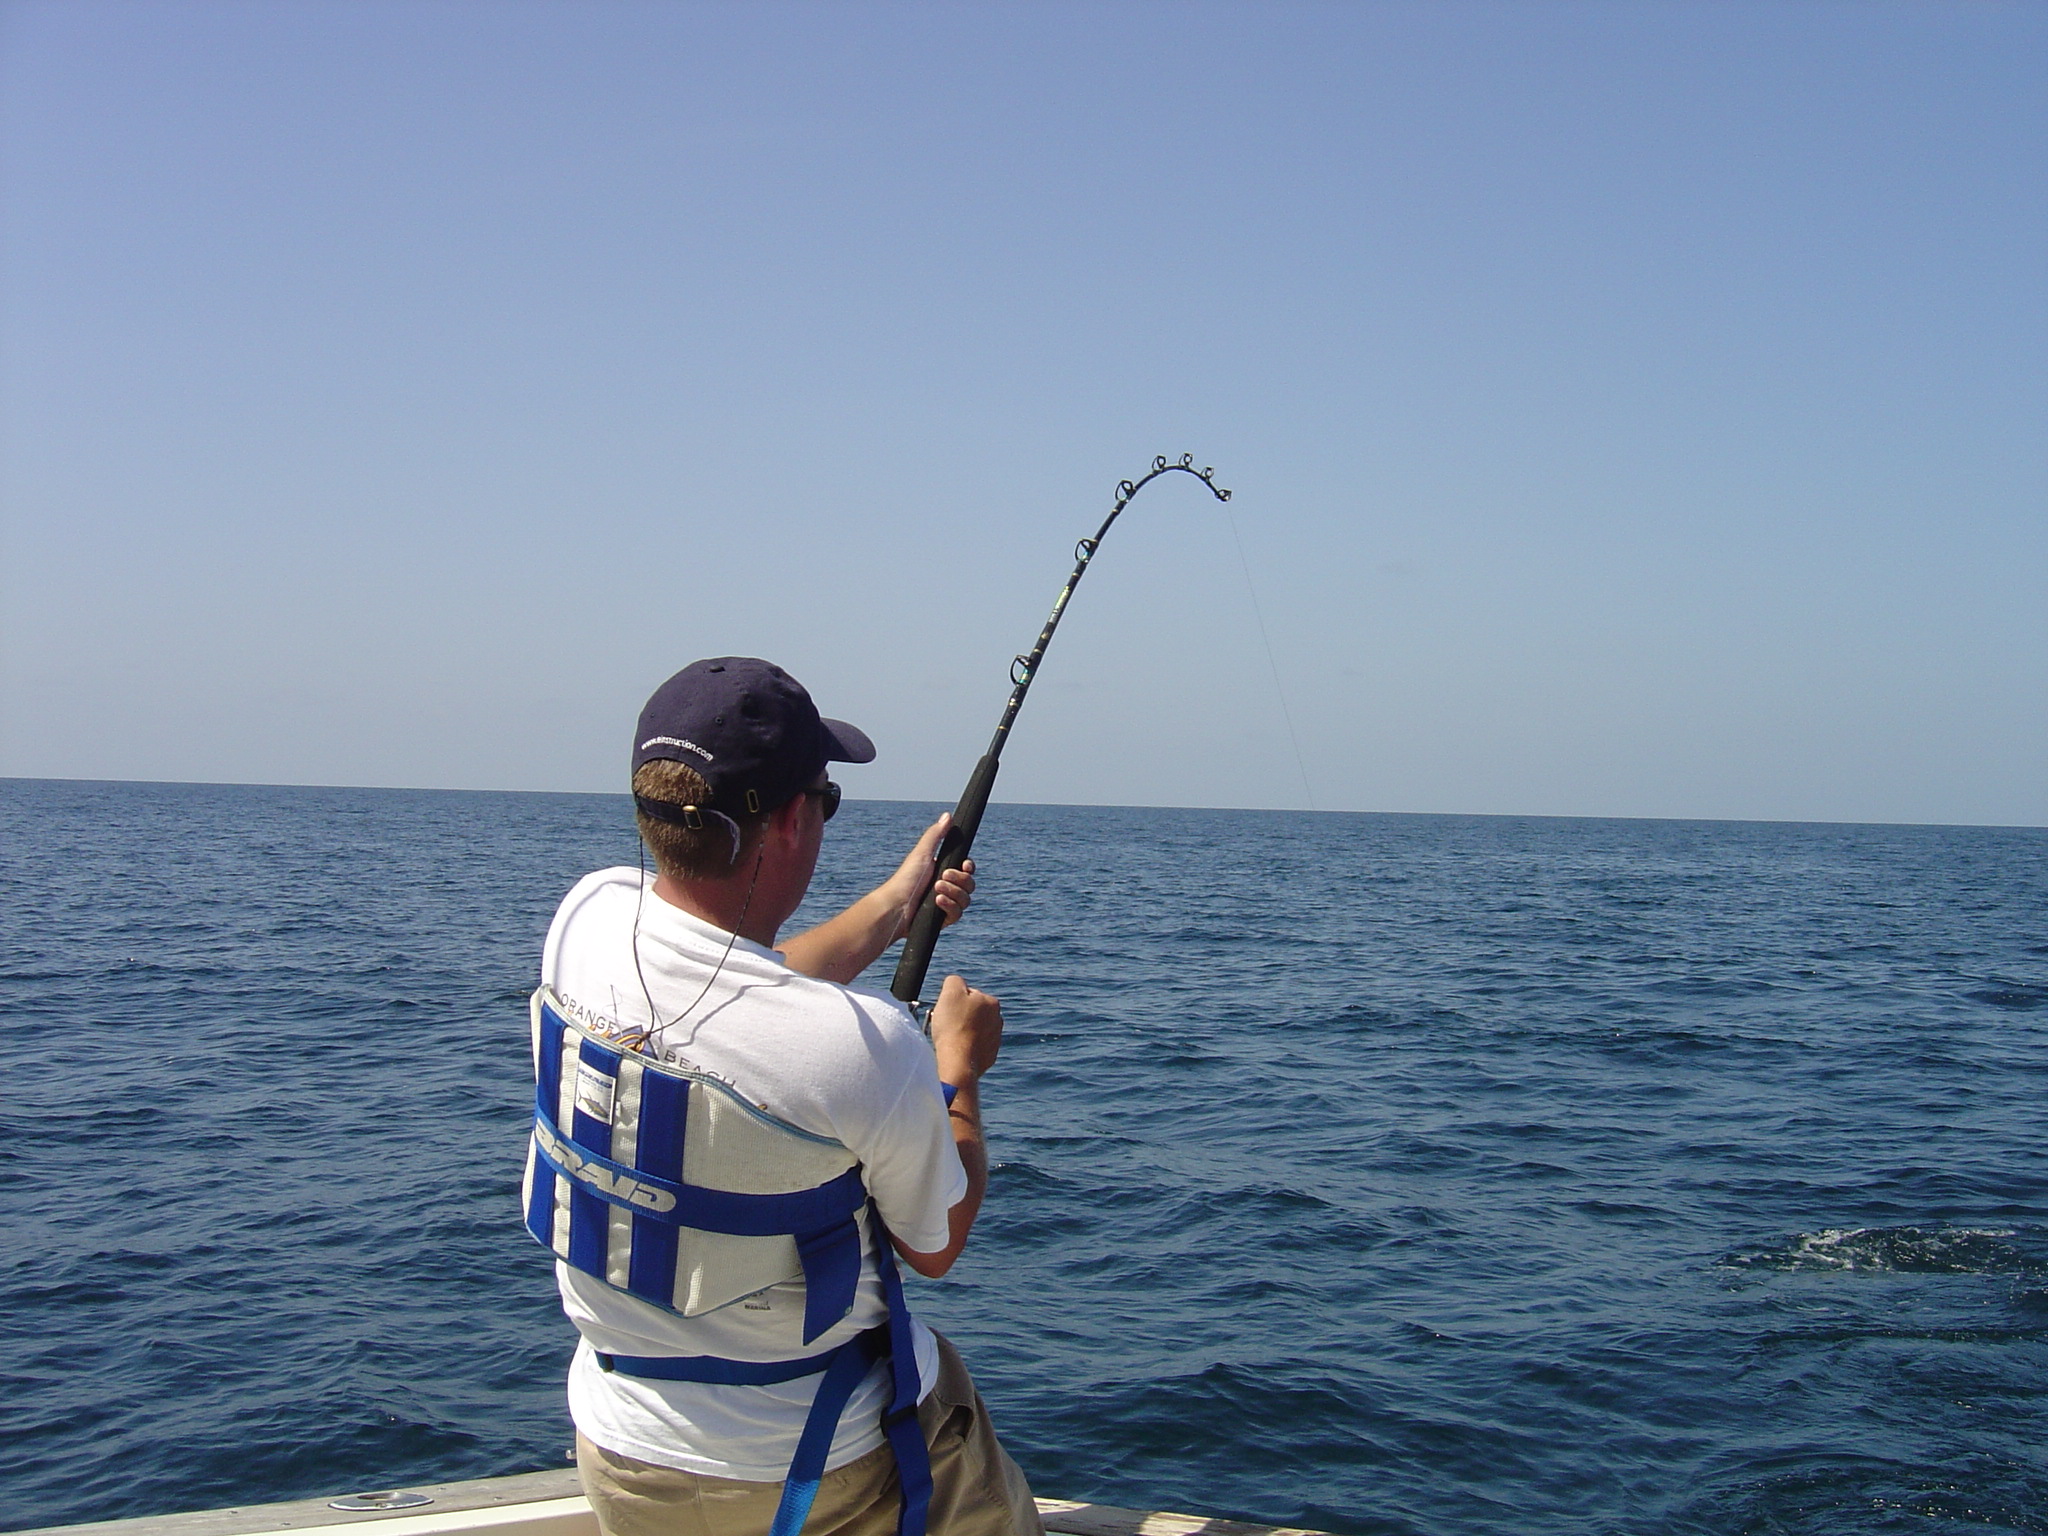 Pesca sportiva: assegnati alla città di Pescara i Campionati mondiali di “Big game fishing - specialità Drifting” 2022